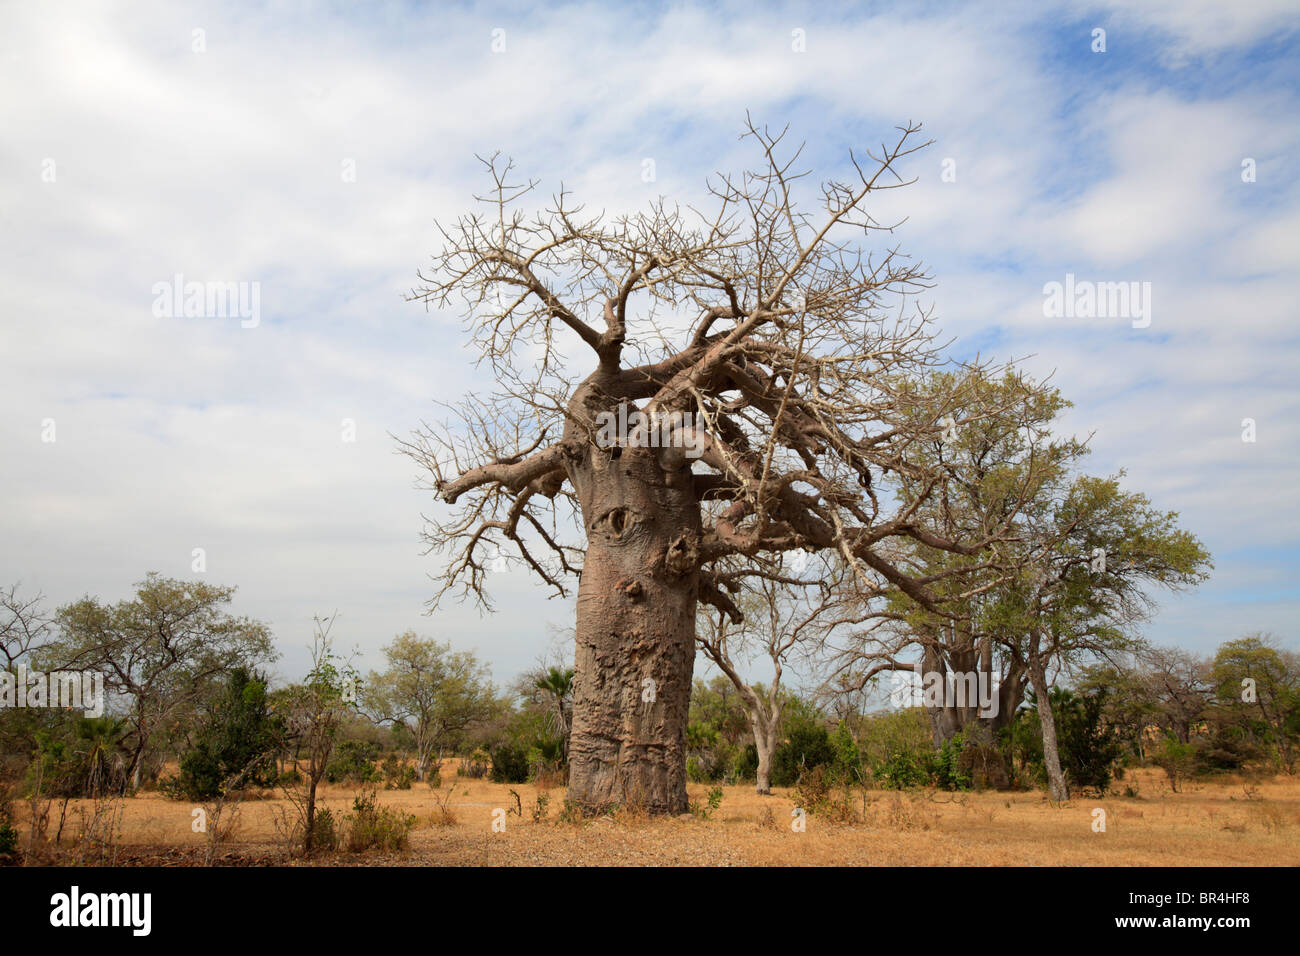 Giant Baobab tree (Adansonia digitata), Tanzania Stock Photo